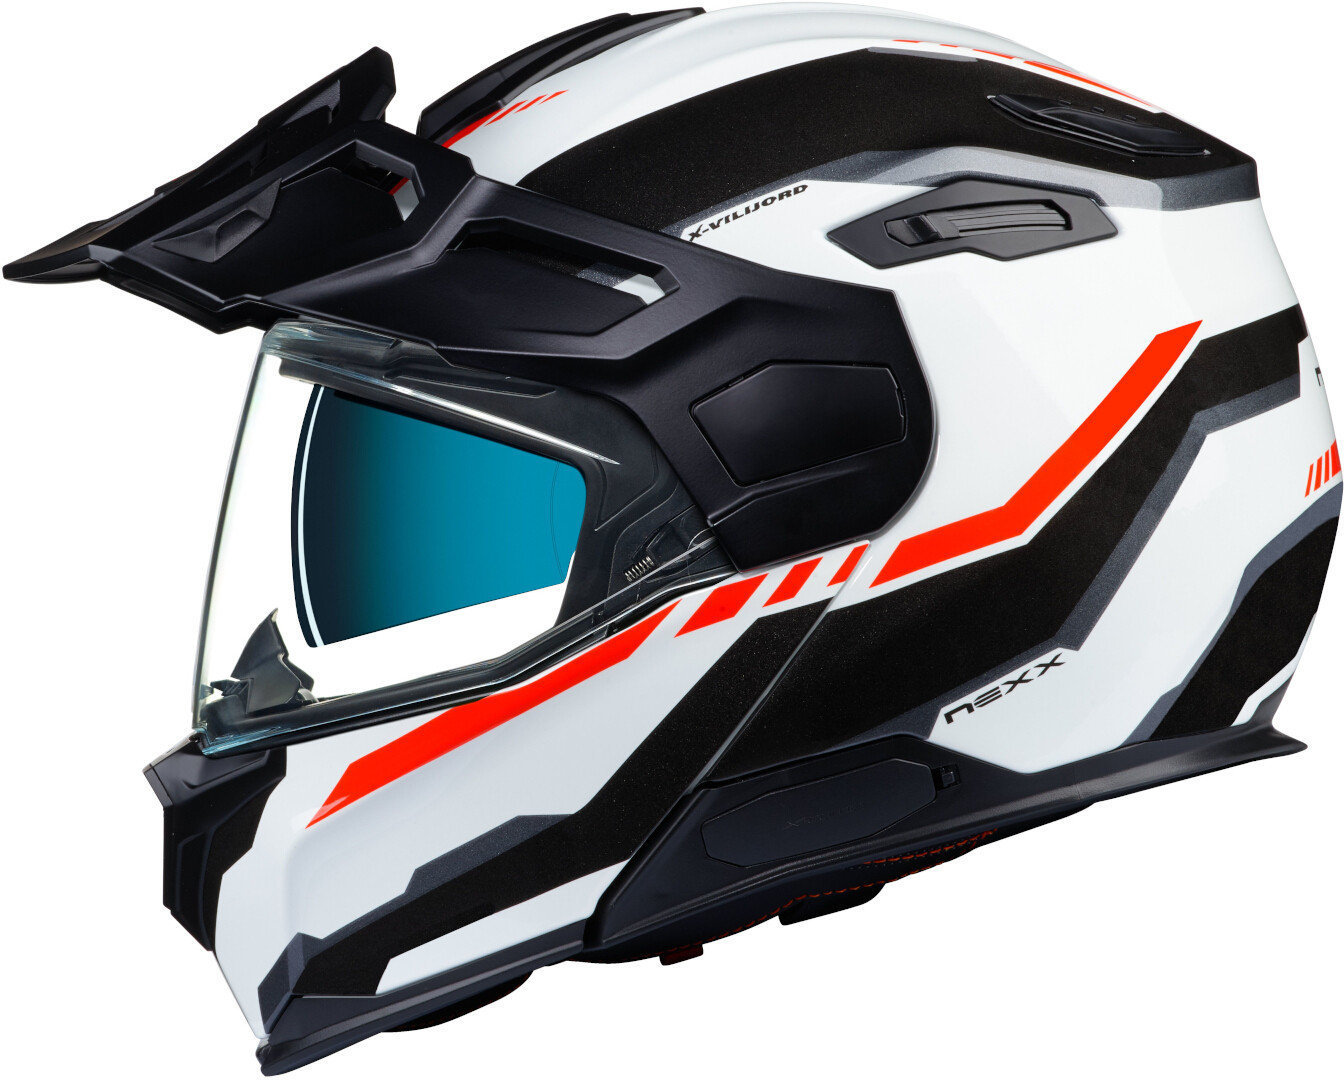 Nexx X.Vilijord Continental Helmet, black-white-red, Size 3XL, black-white-red, Size 3XL